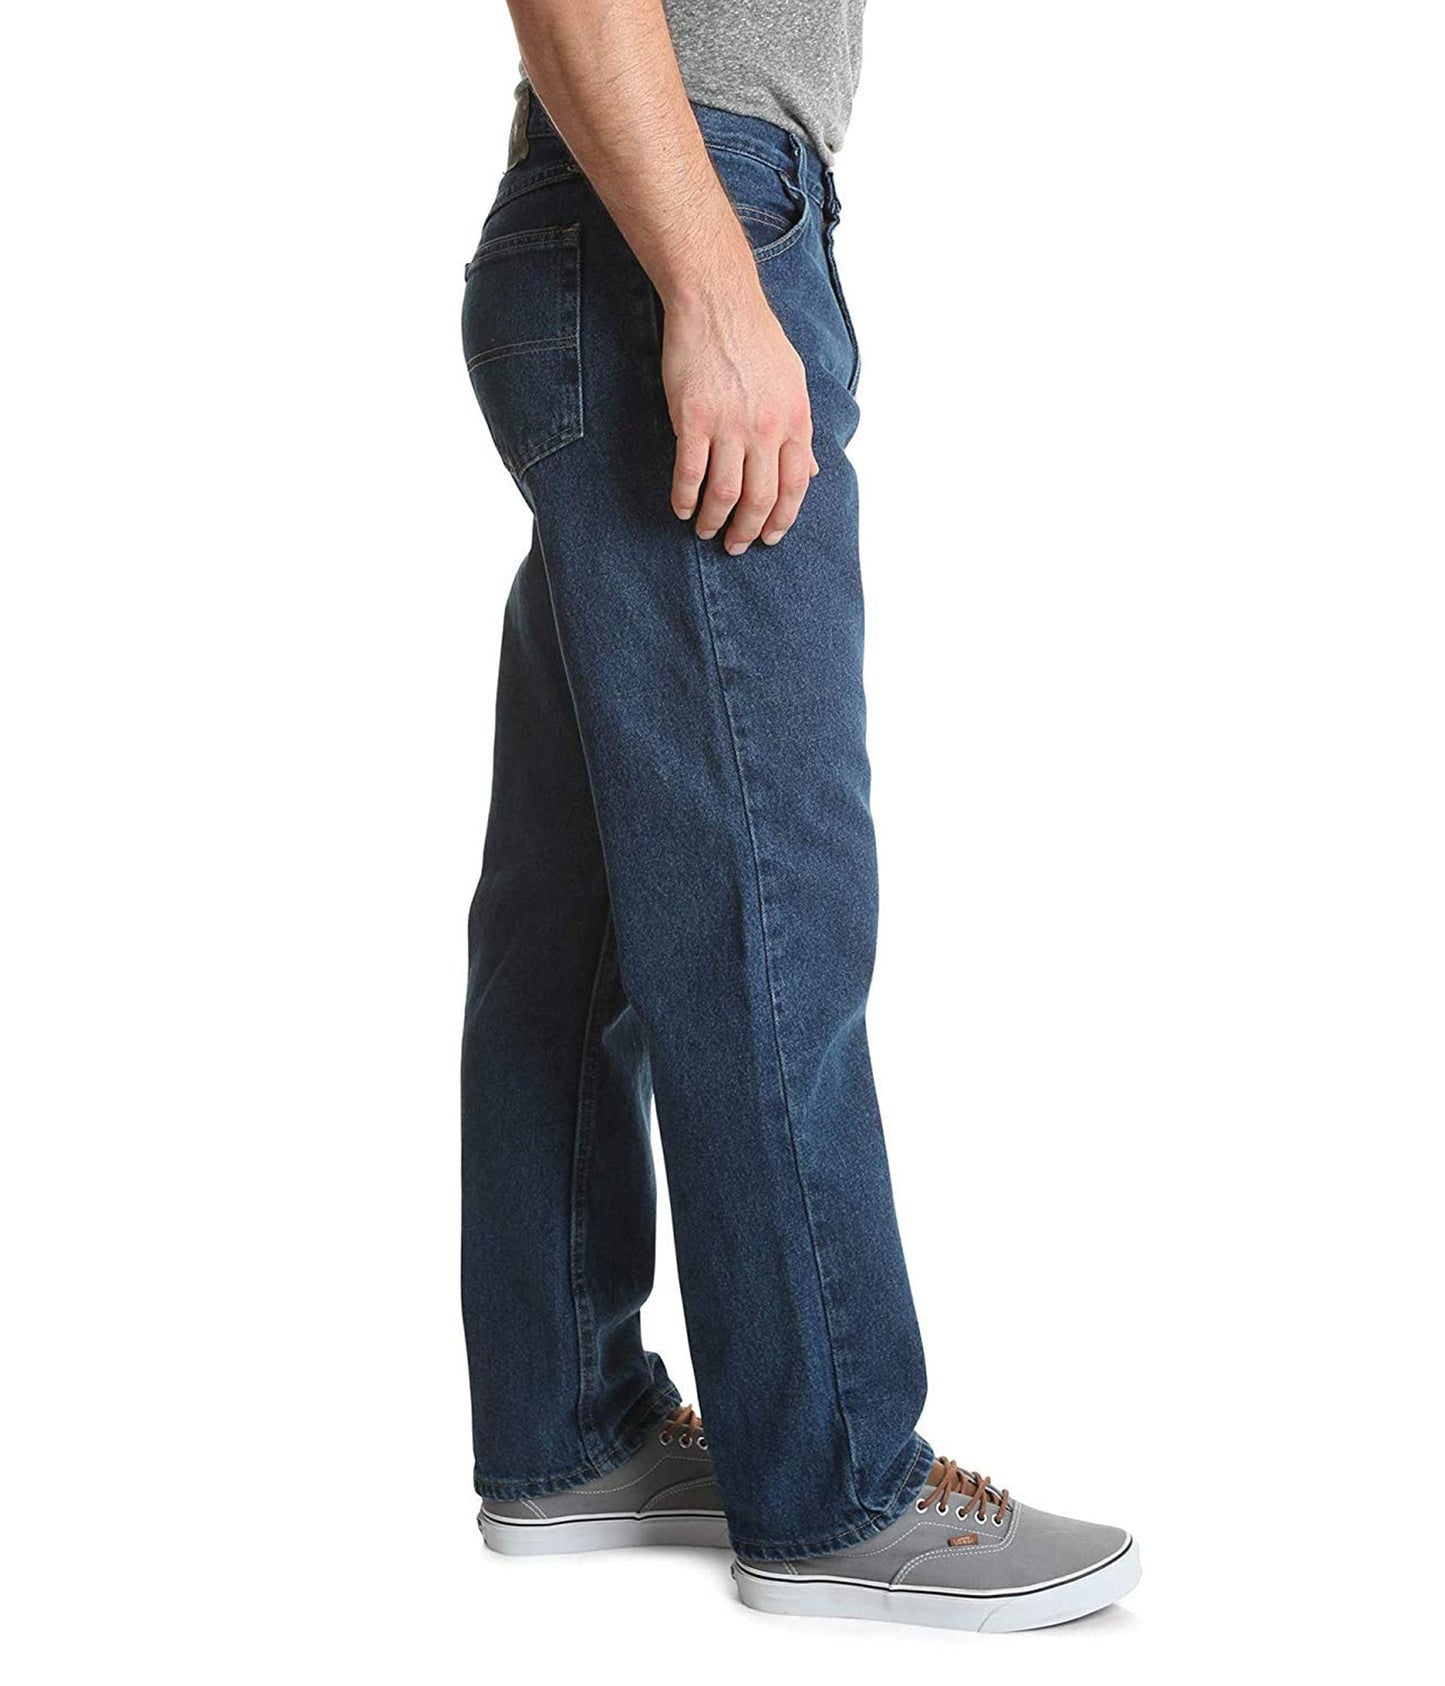 Wrangler Authentics Men's Classic 5-Pocket Relaxed Fit Cotton Jean, Dark Stonewash, 35W x 32L